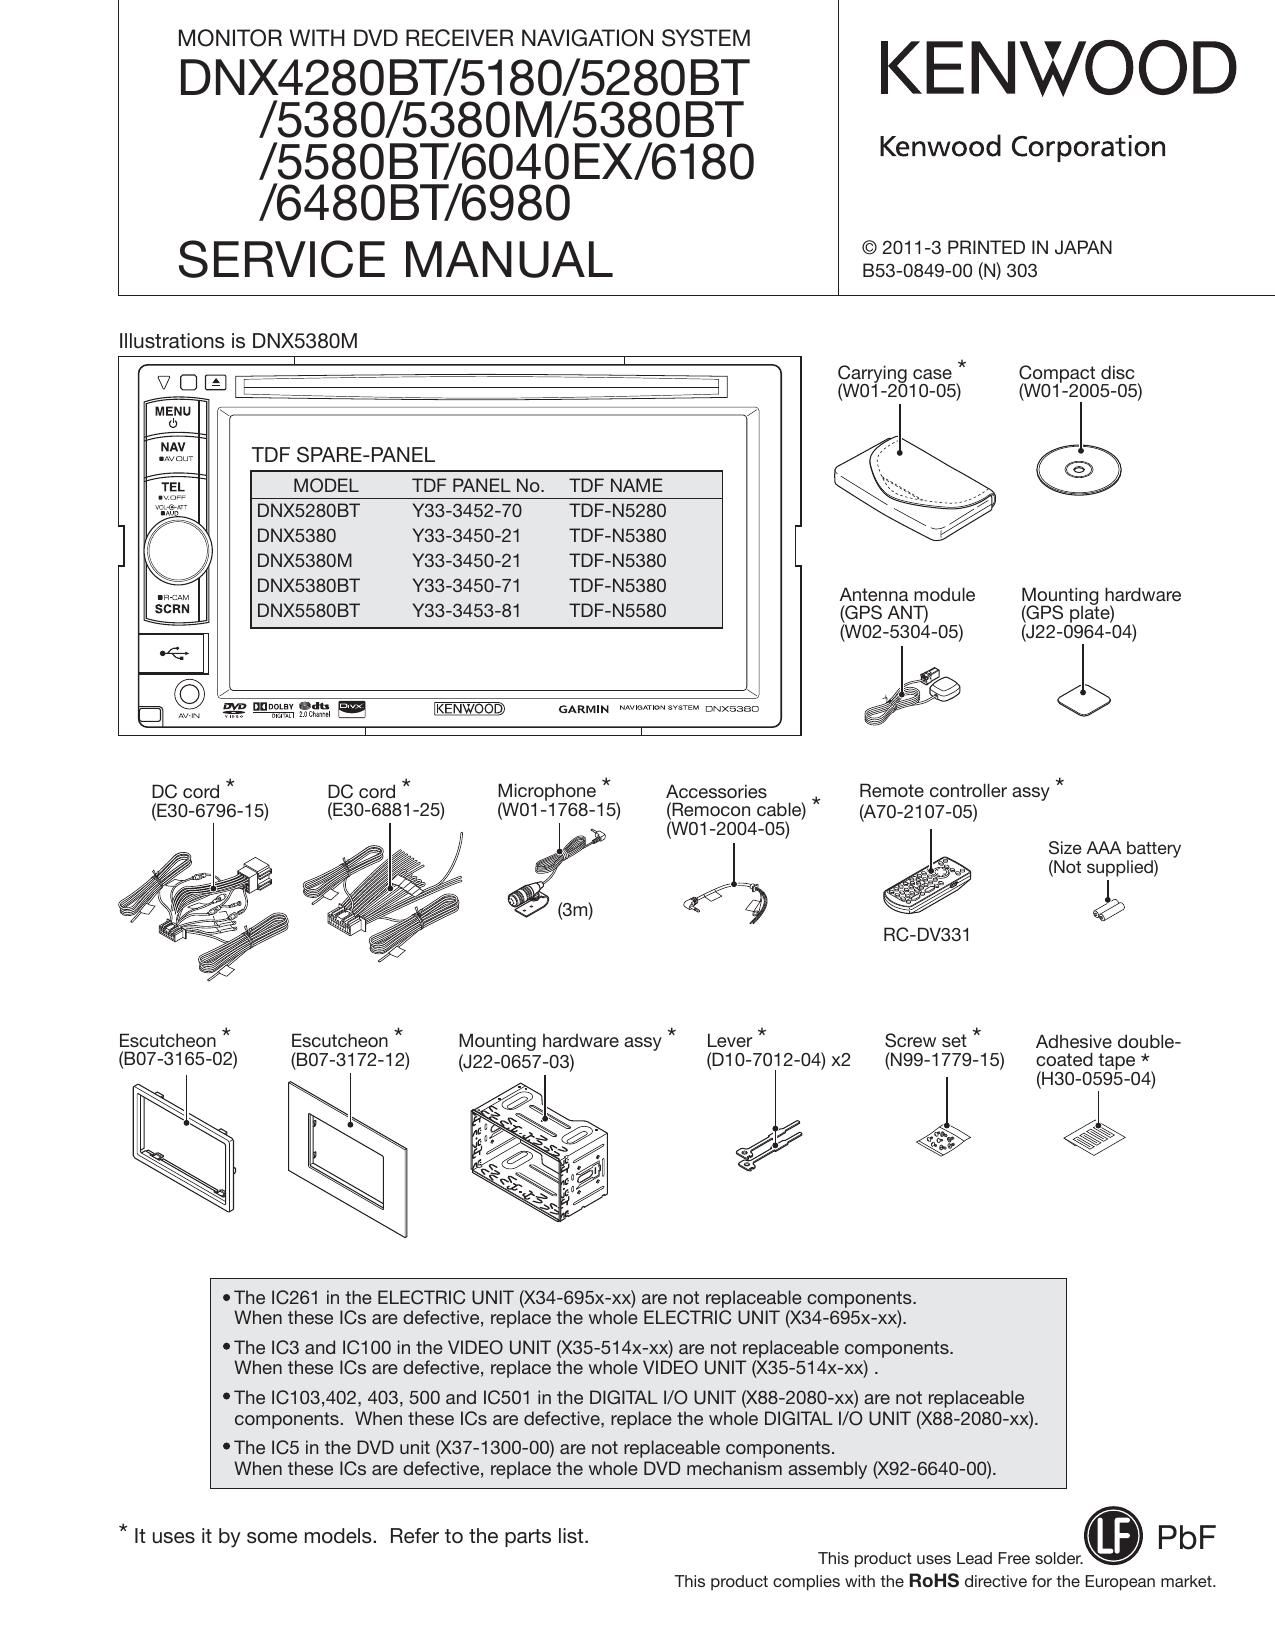 Kenwood DNX 5380 M Service Manual